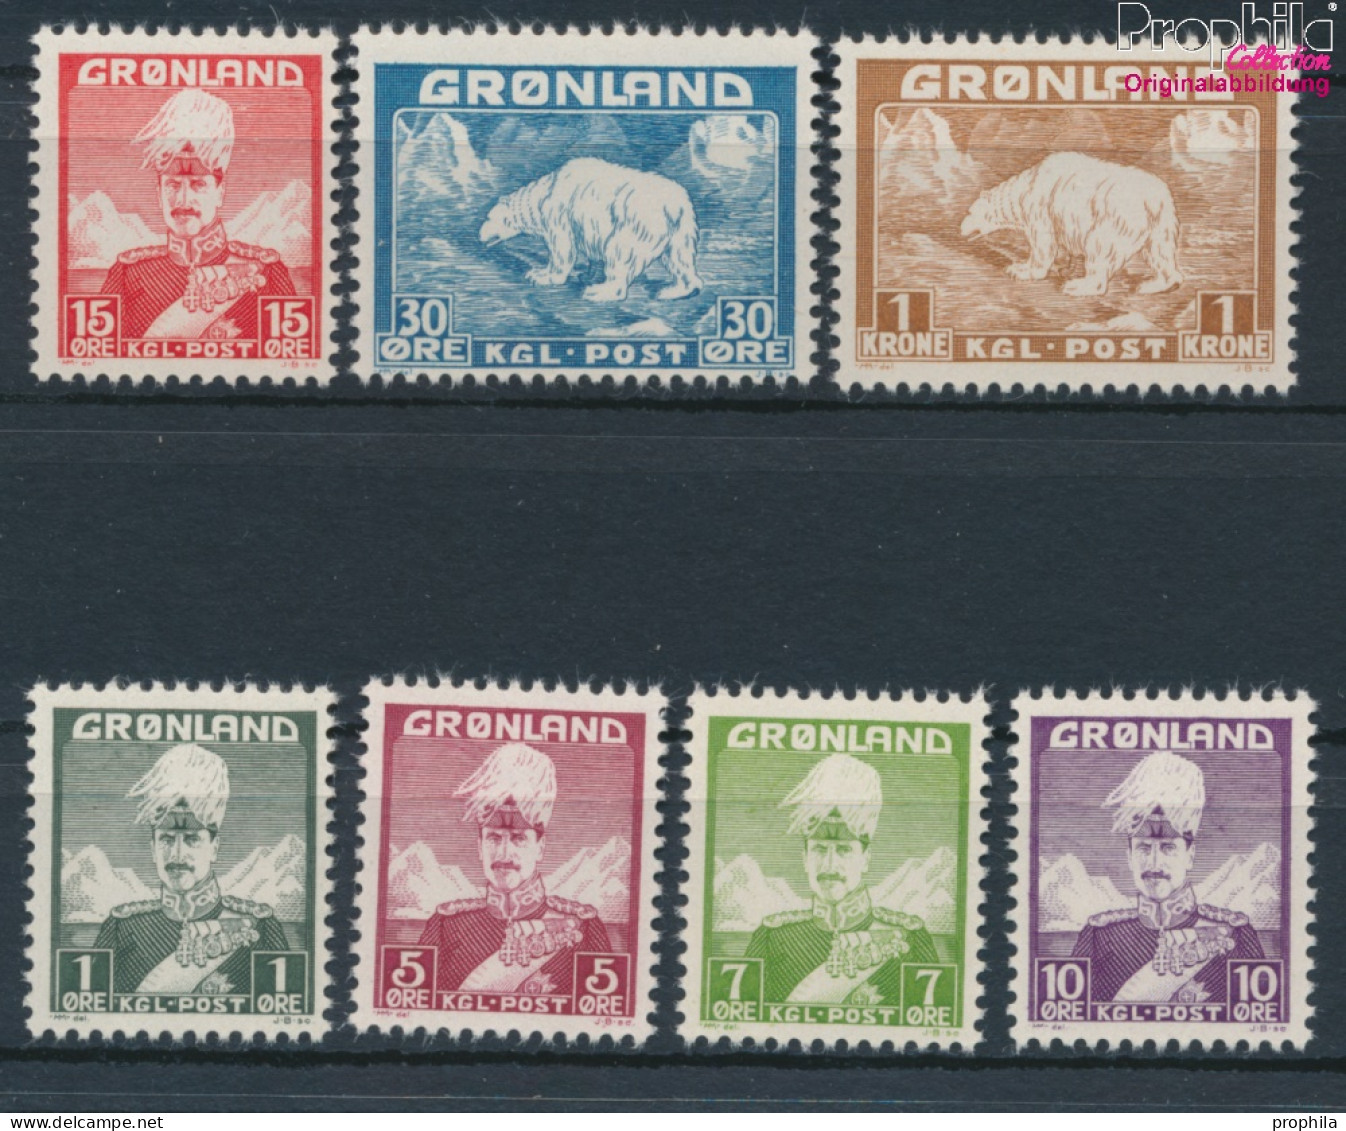 Dänemark - Grönland Postfrisch Christian X. 1938 König Christian X.  (10174221 - Usati